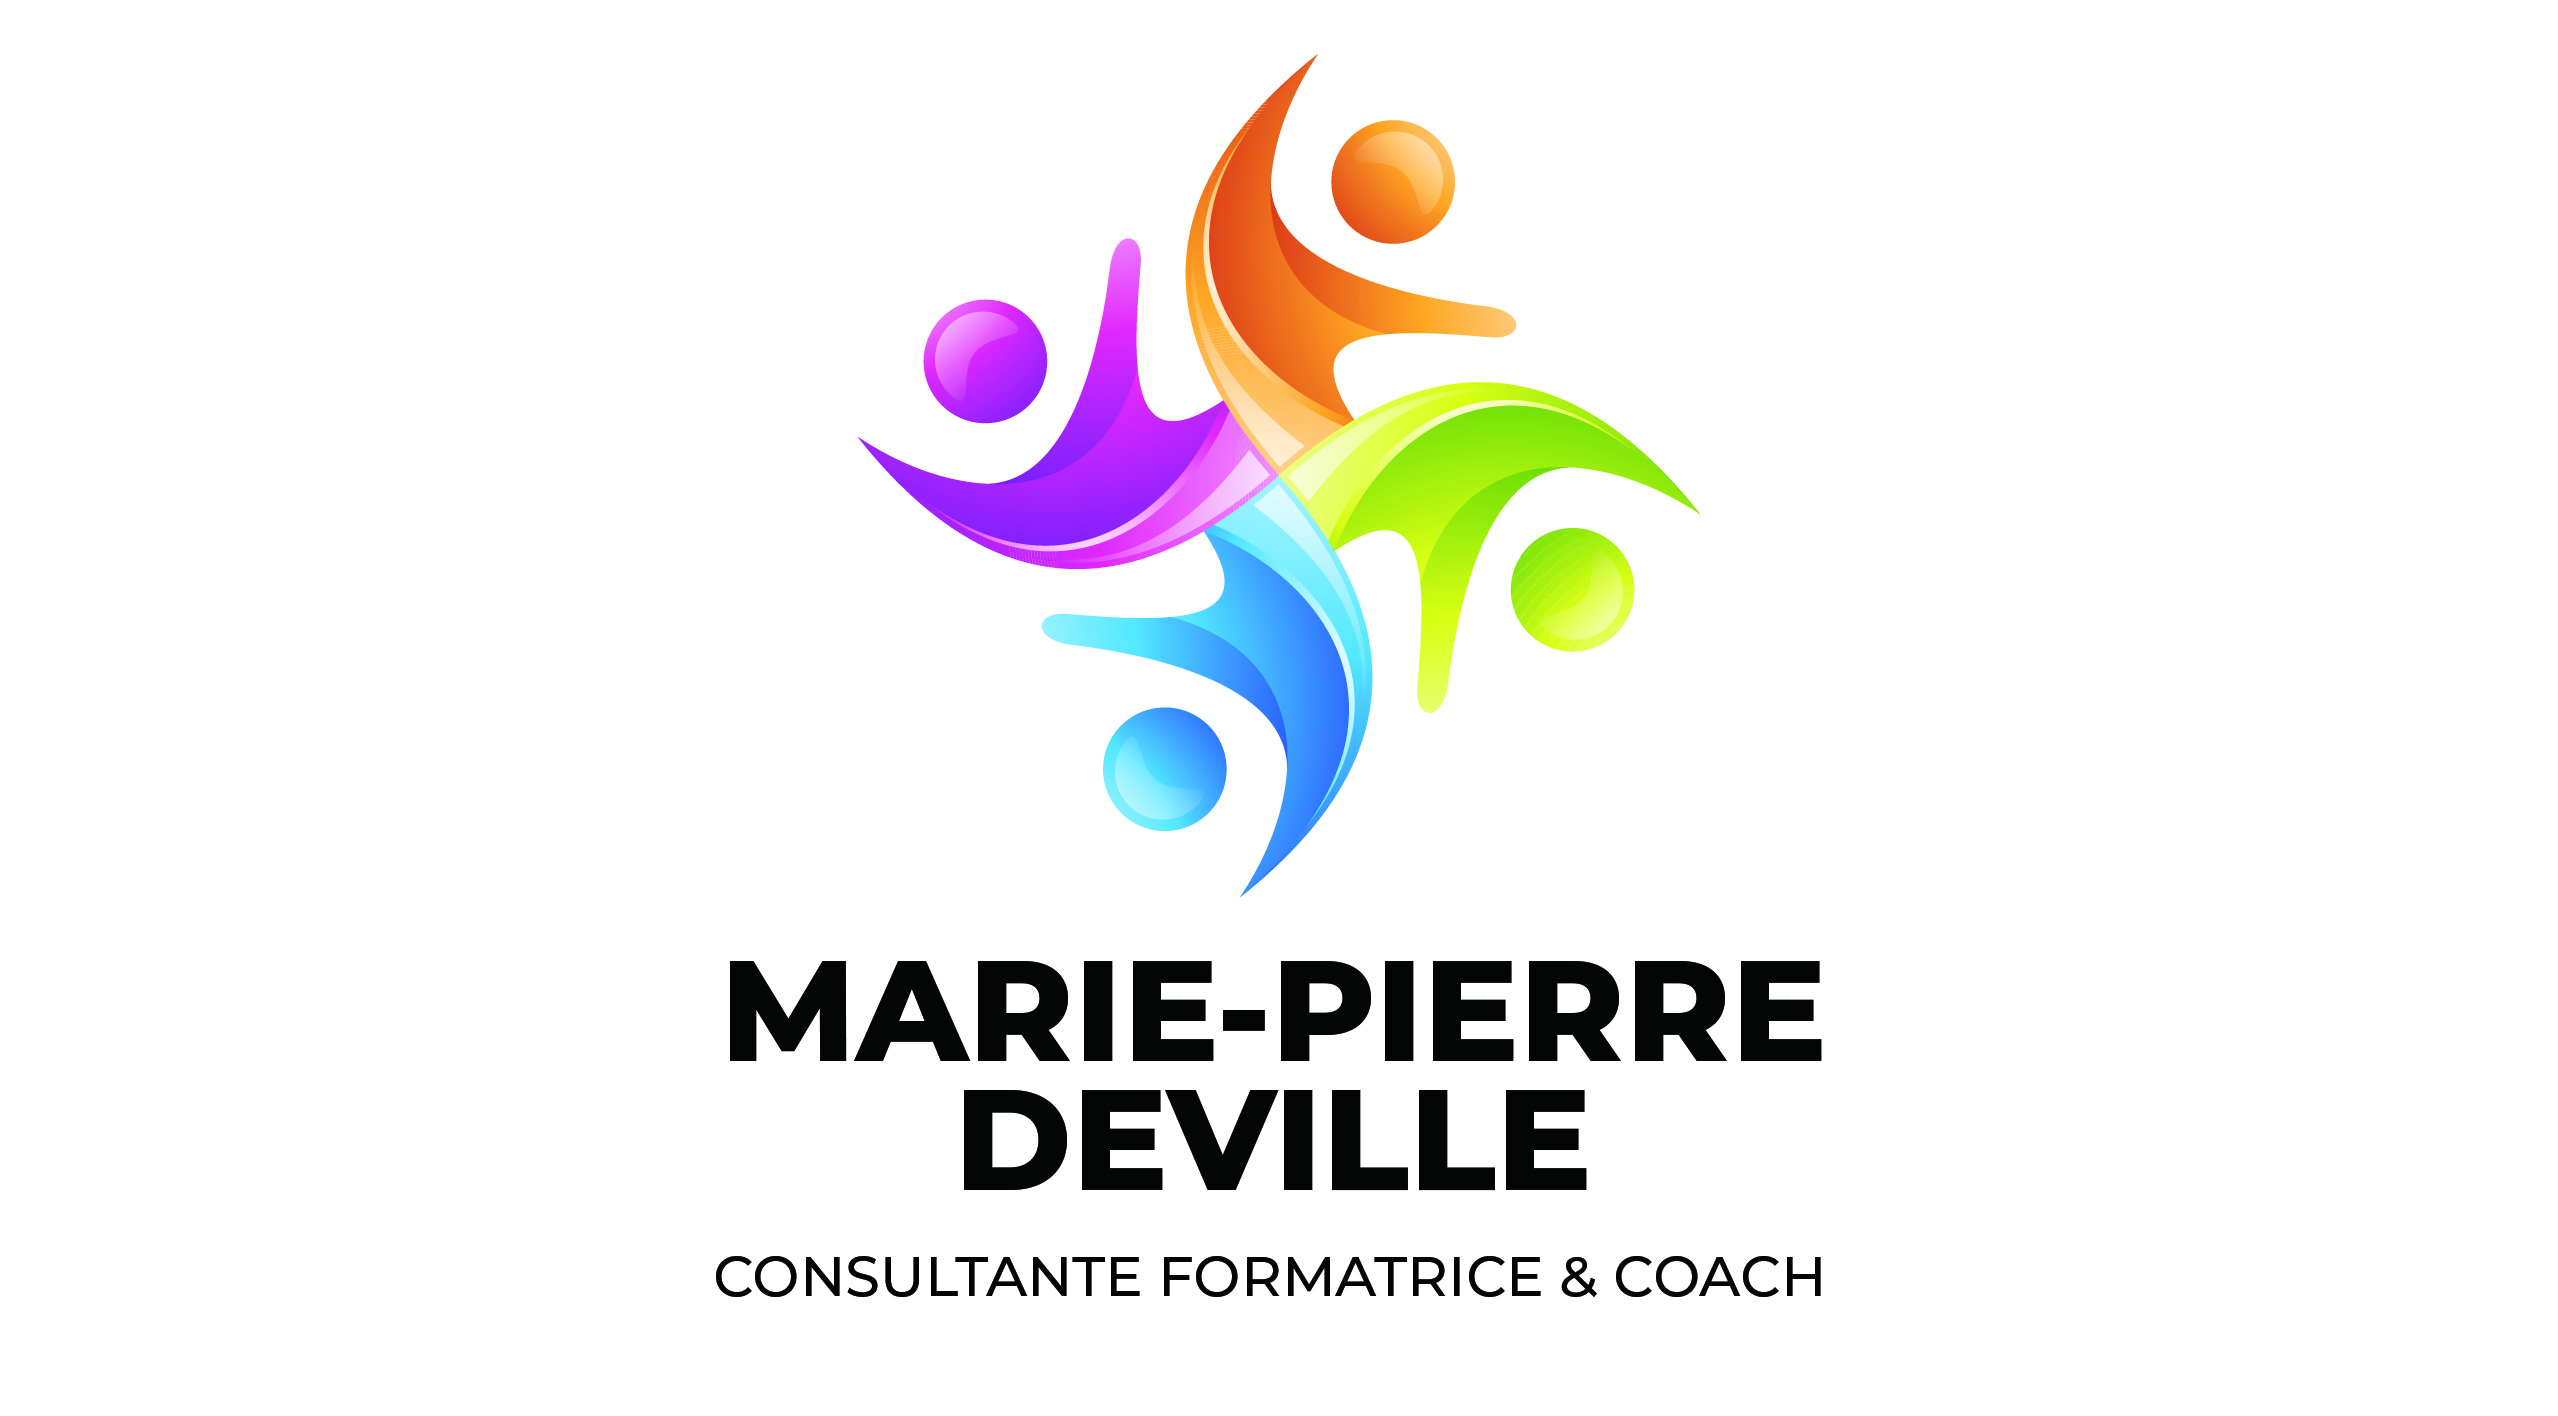 Marie-Pierre Deville